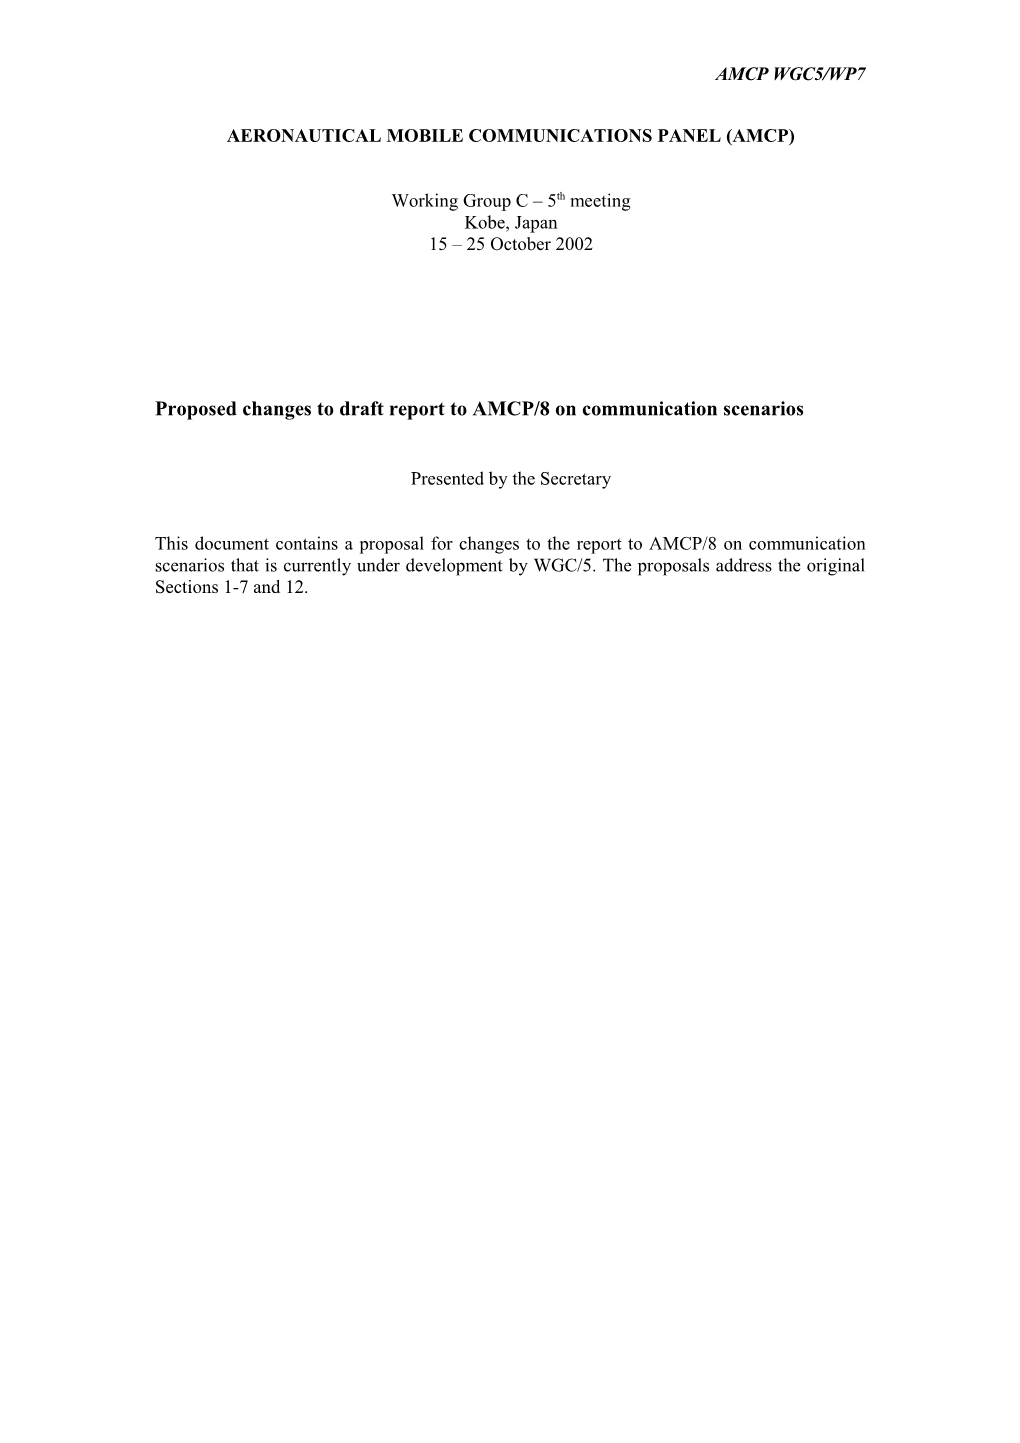 International Telecommunication Union Issues Regarding the Universal Access Transceiver